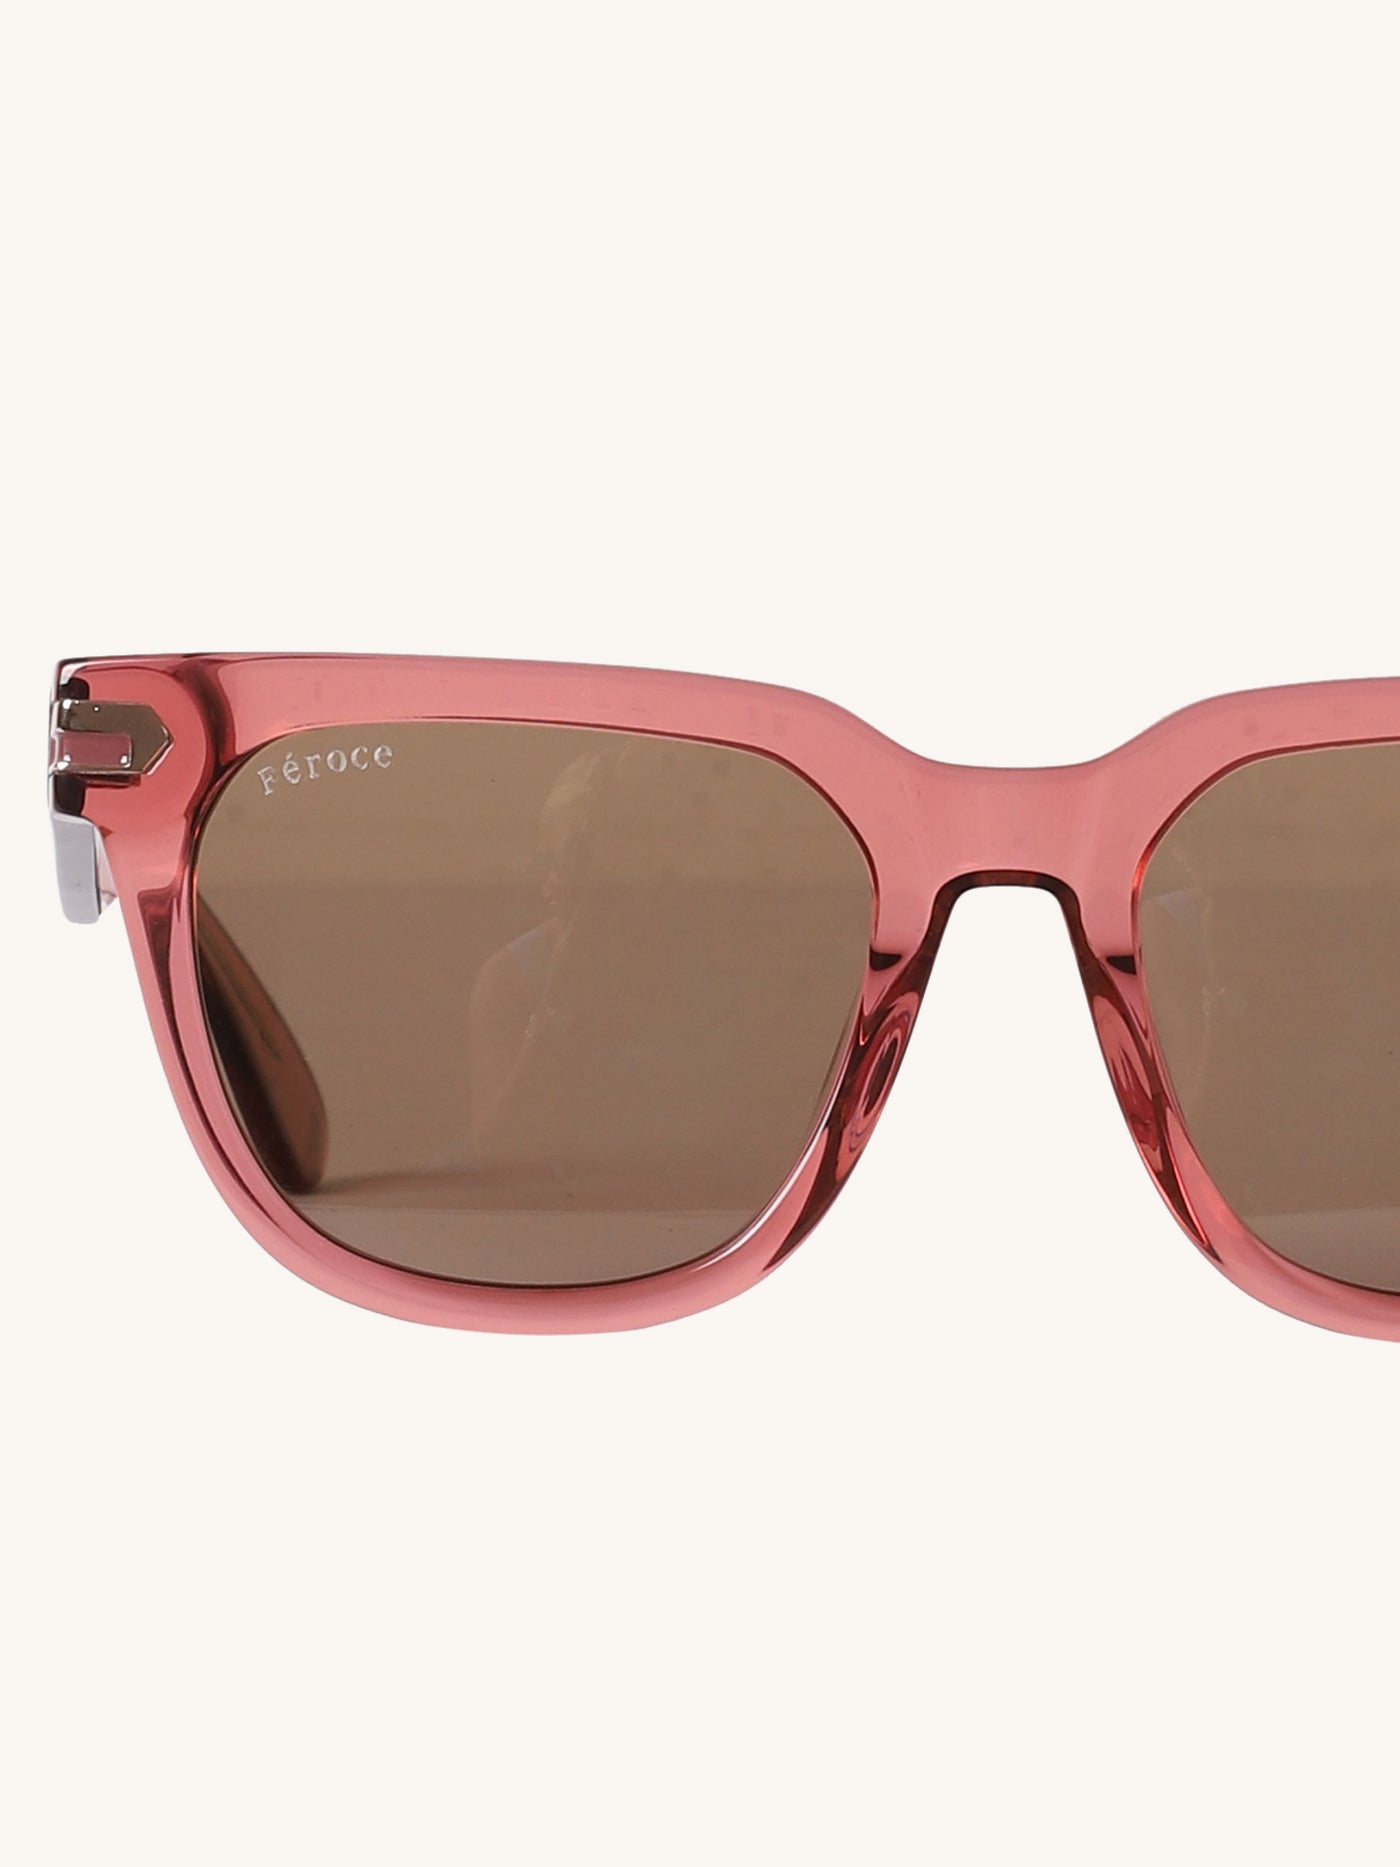 Cara Sunglasses in Vino